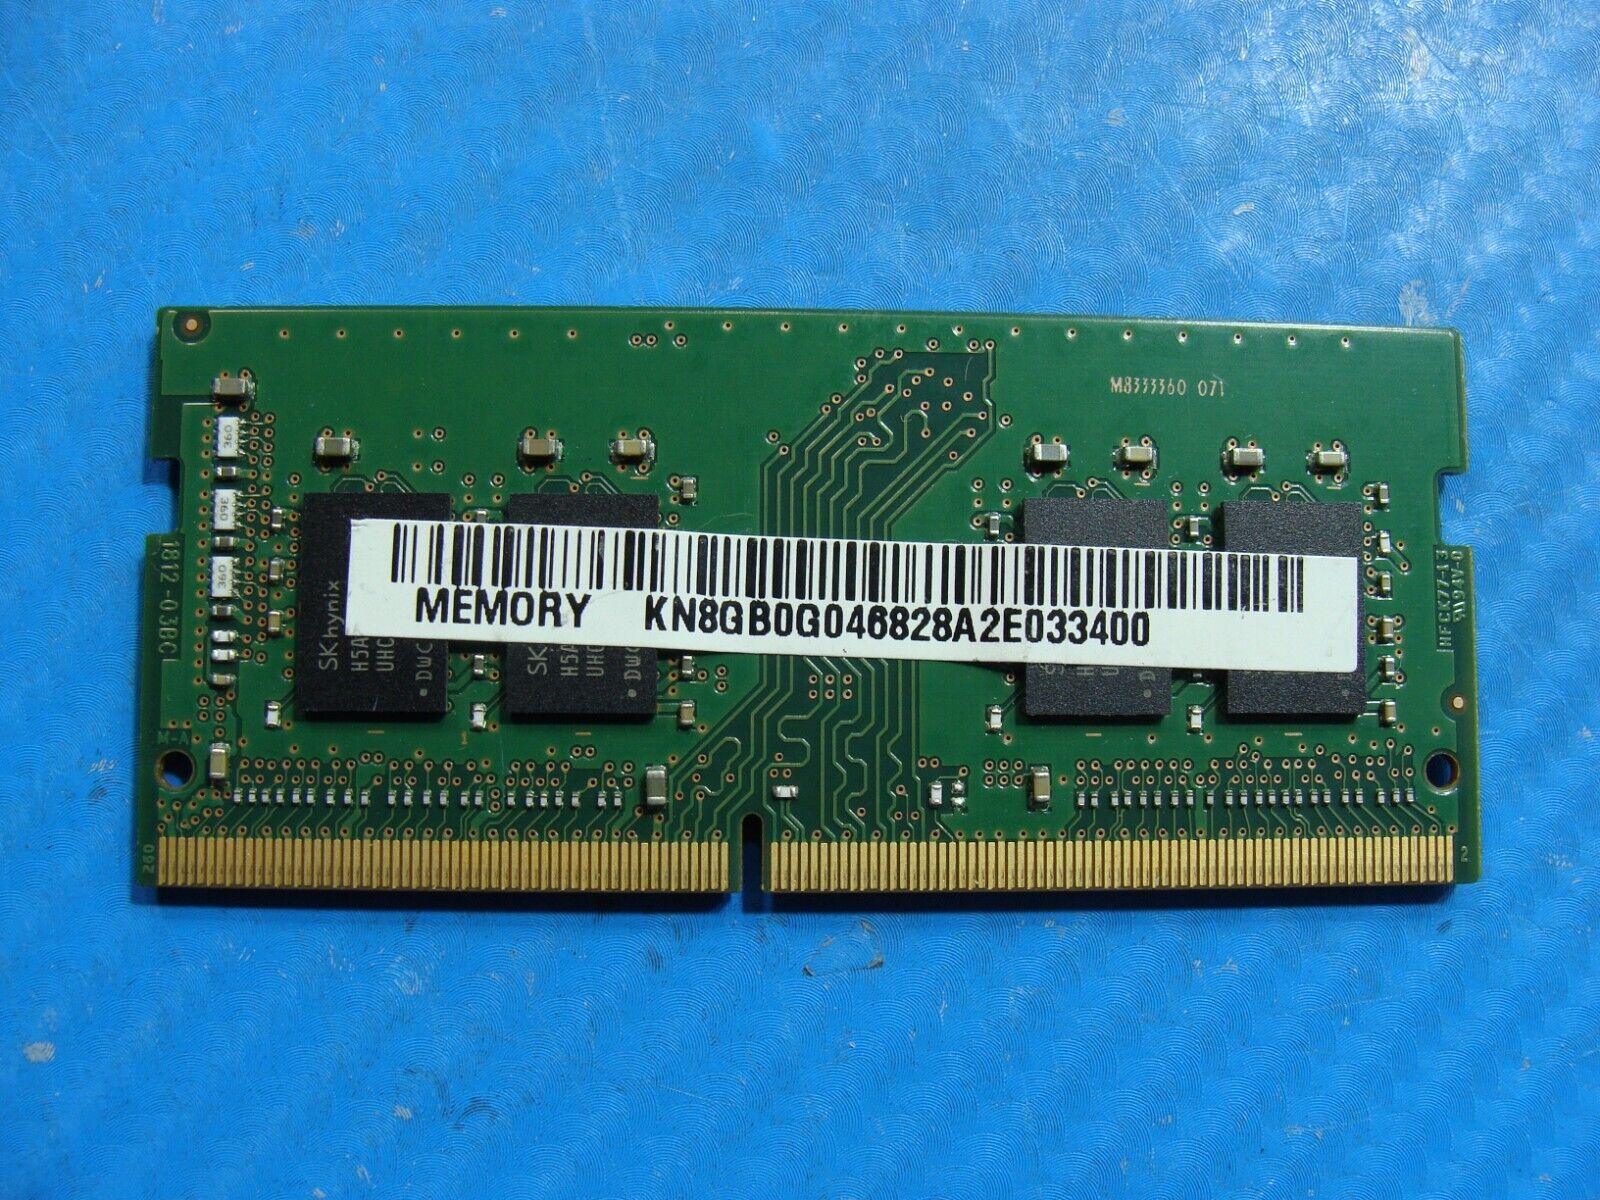 HP 250 G6 SK Hynix 8GB 1Rx8 PC4-2400T Memory RAM SO-DIMM HMA81GS6AFR8N-UH